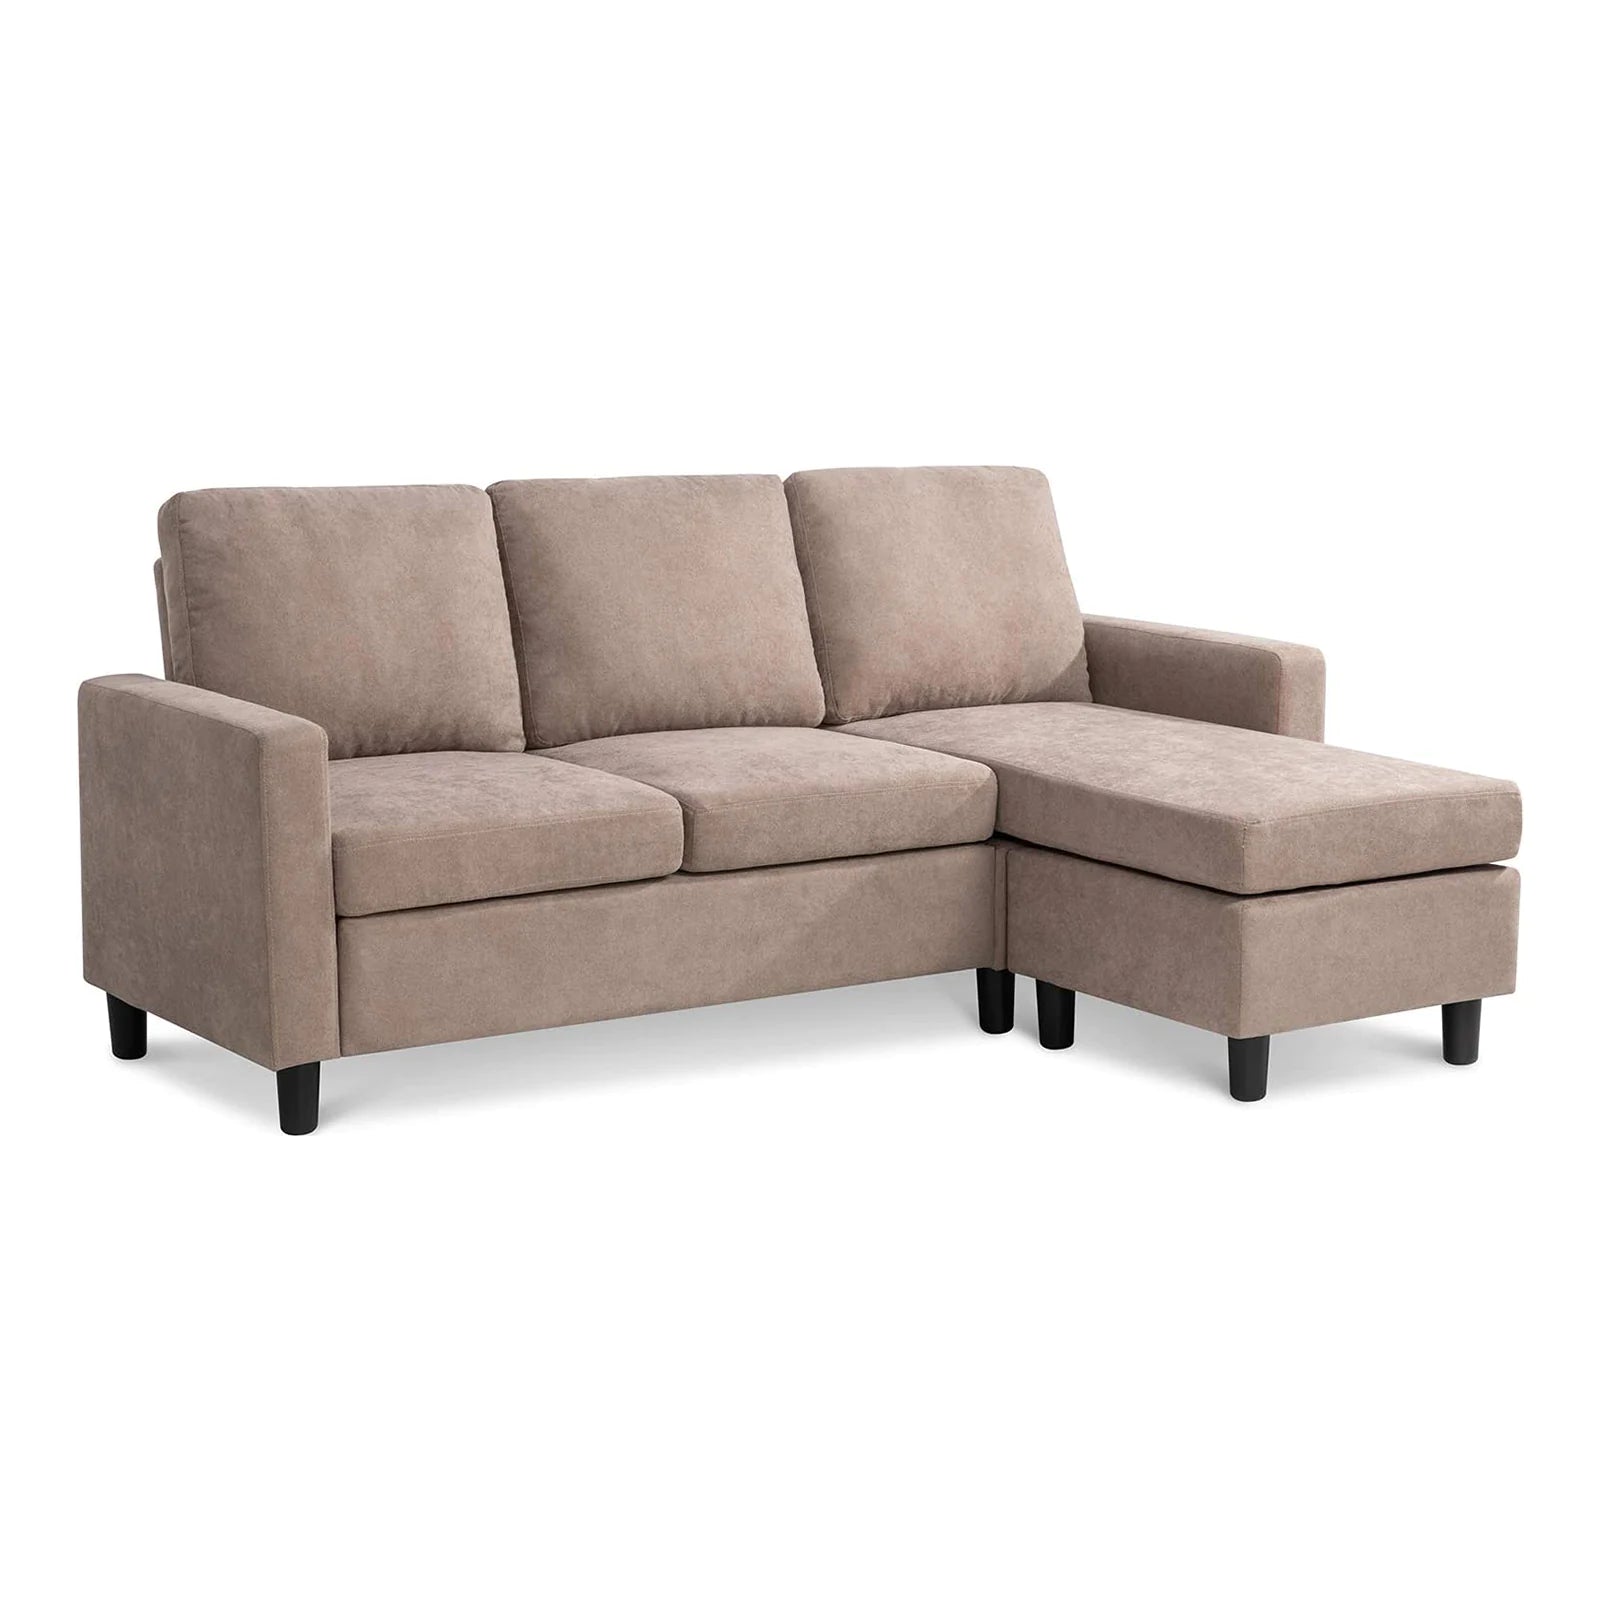 Sofá seccional moderno de 3 asientos en forma de L de tela de lino con chaise reversible